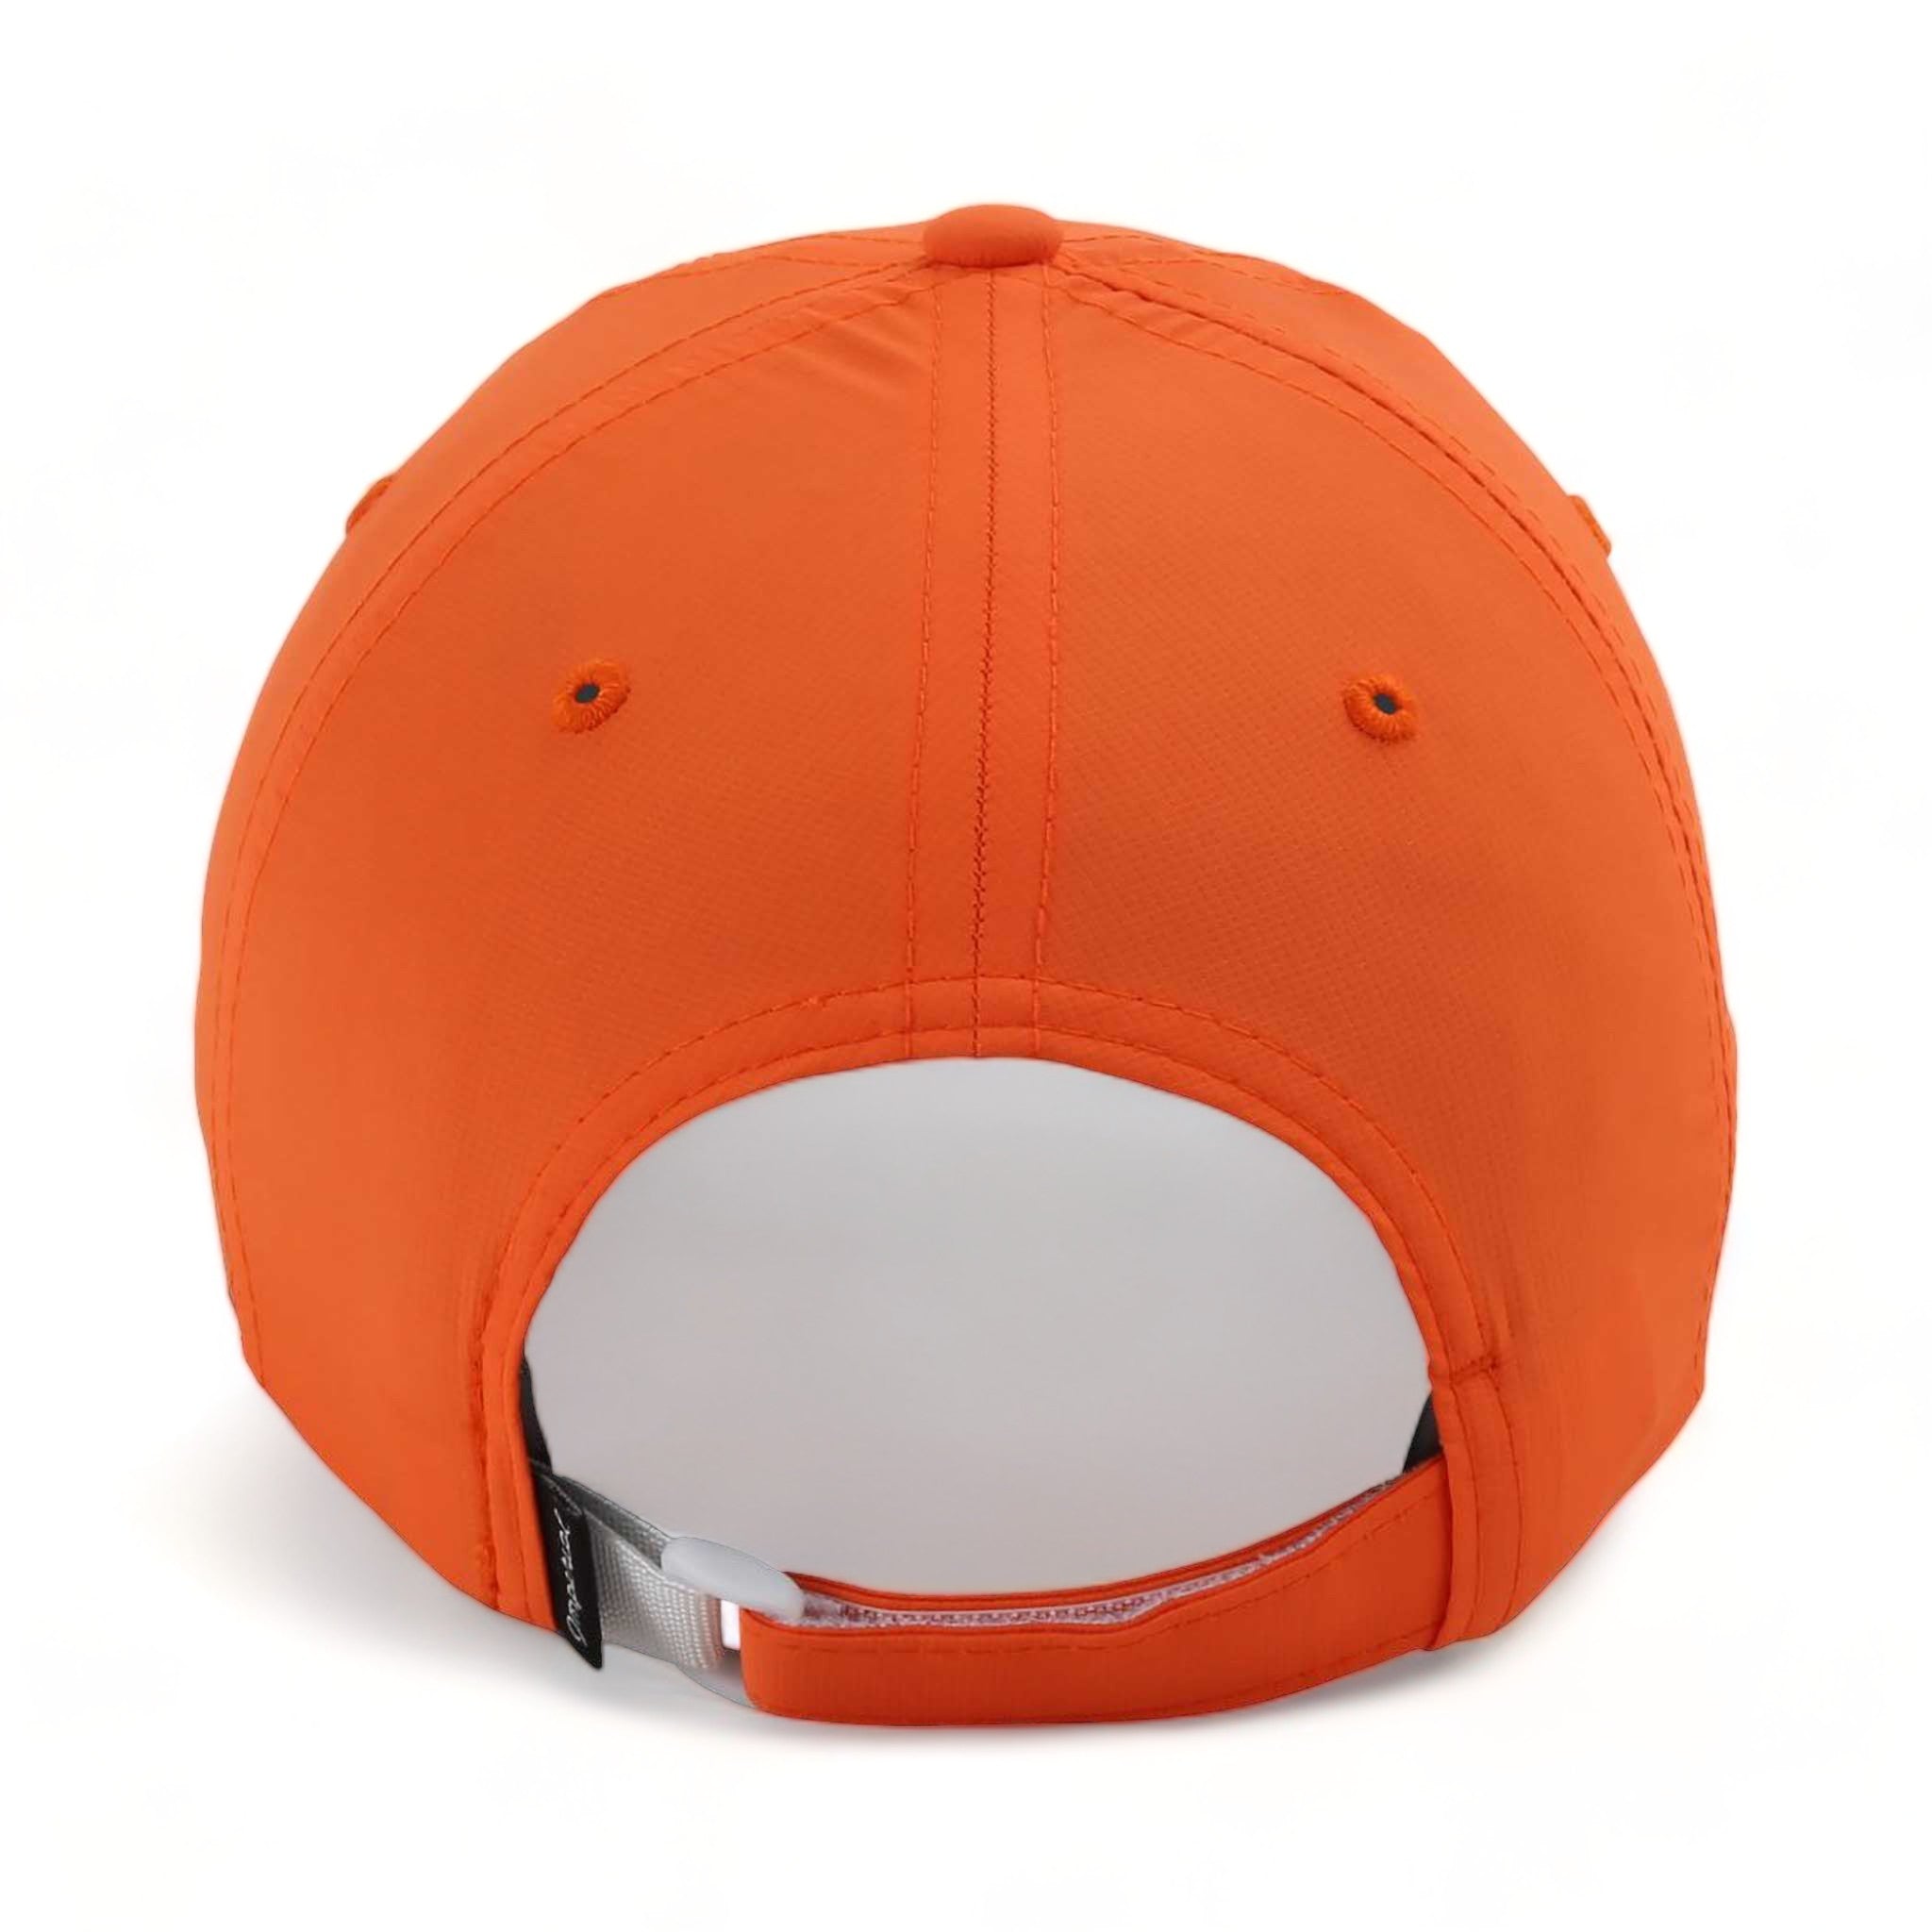 Back view of Imperial X210P custom hat in orange